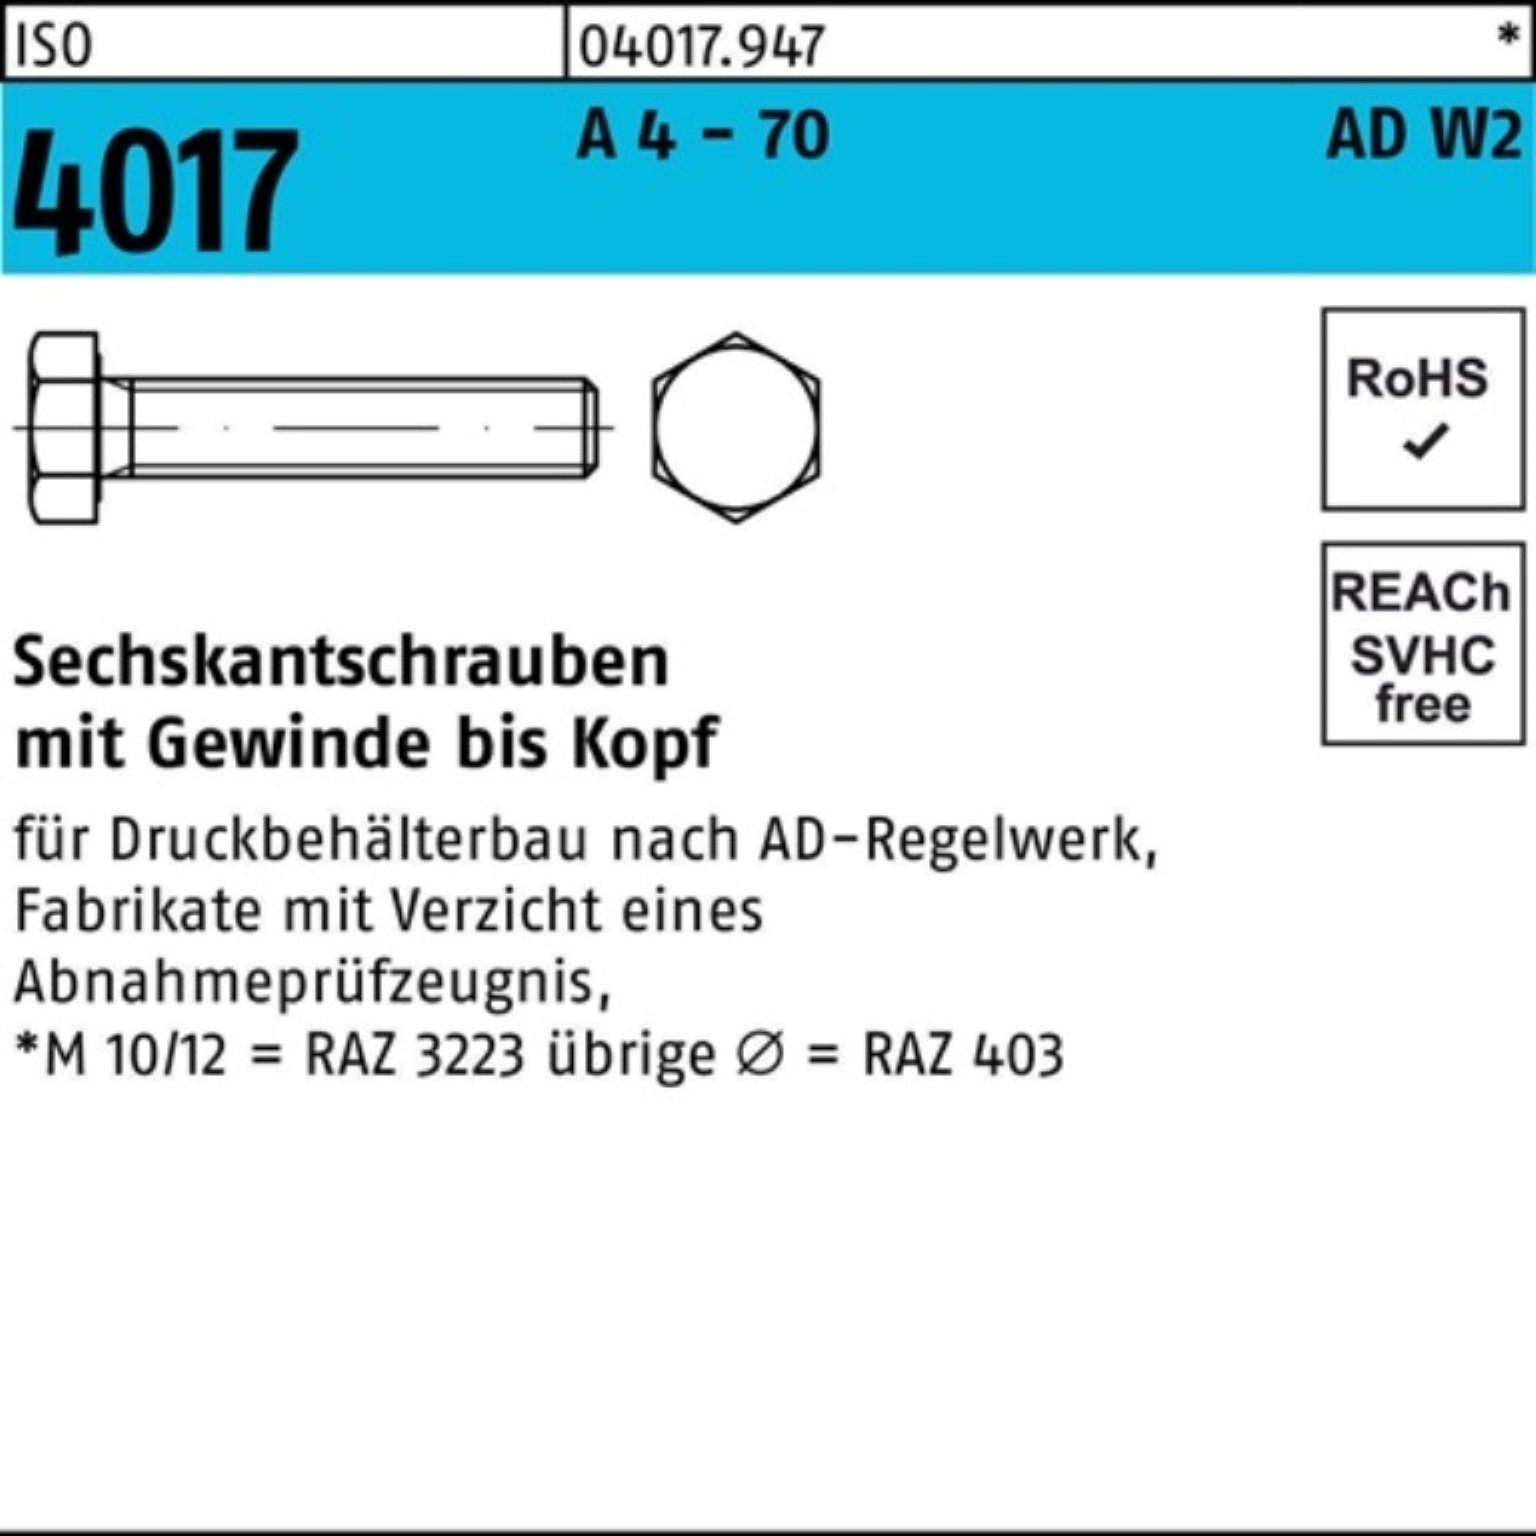 Bufab Sechskantschraube 100er Pack Sechskantschraube ISO 4017 VG M20x 55 A 4 - 70 AD-W2 25 St